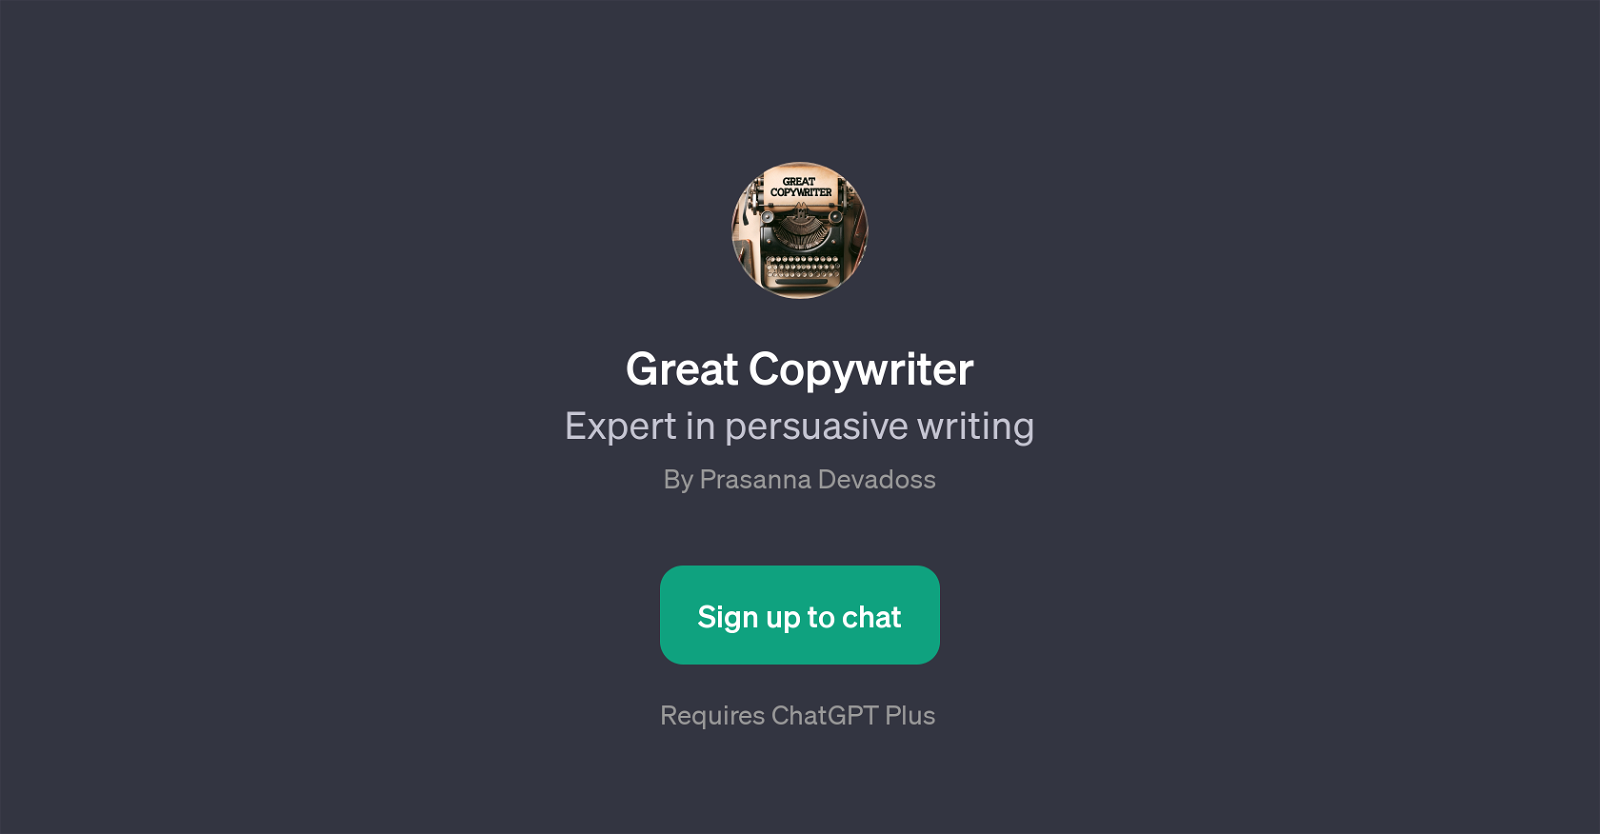 Great Copywriter website